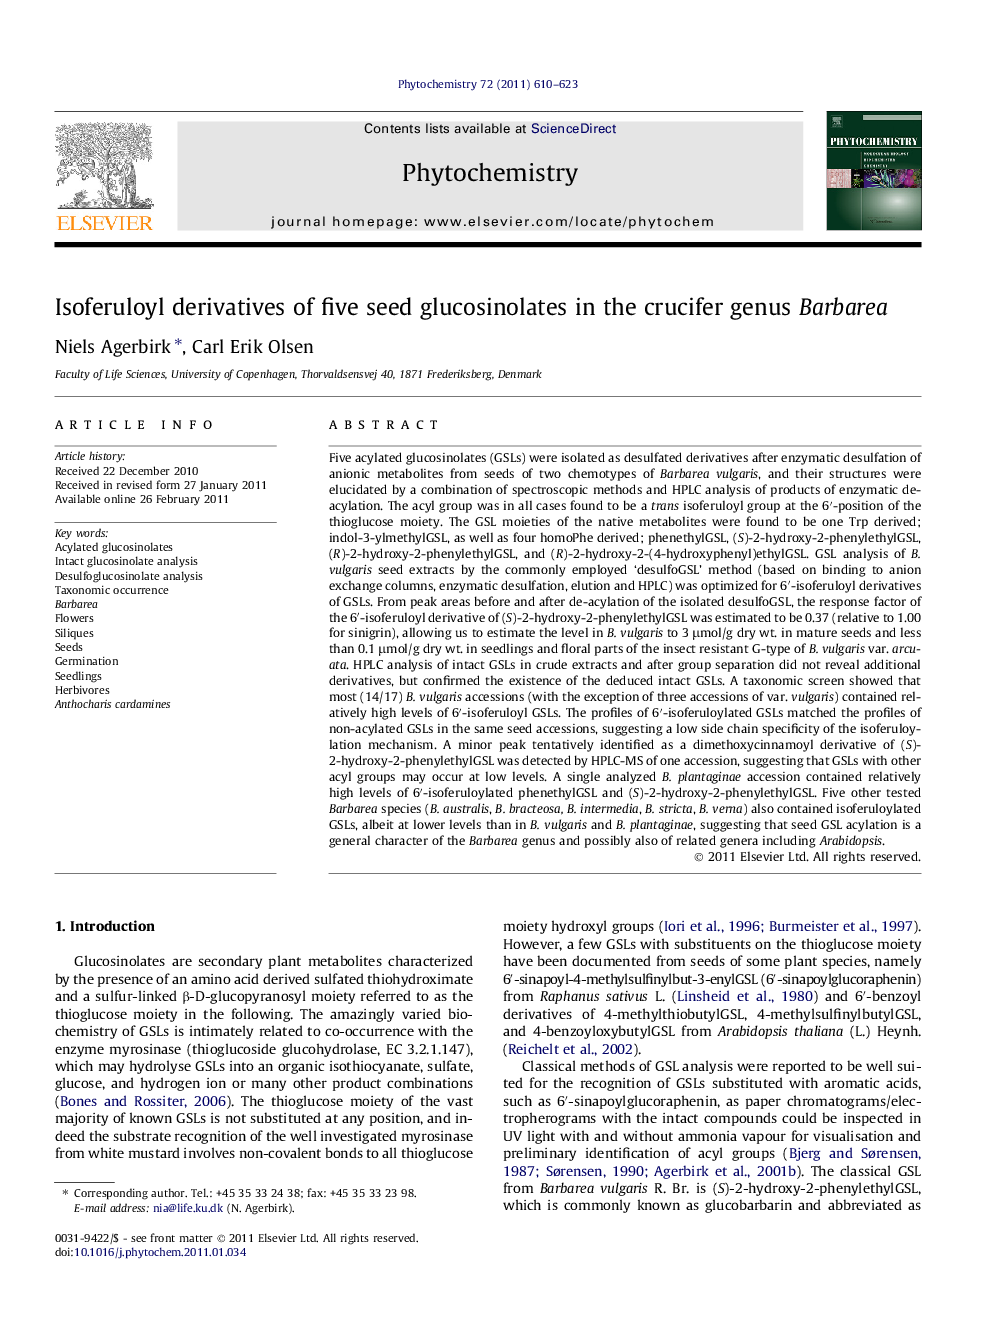 Isoferuloyl derivatives of five seed glucosinolates in the crucifer genus Barbarea